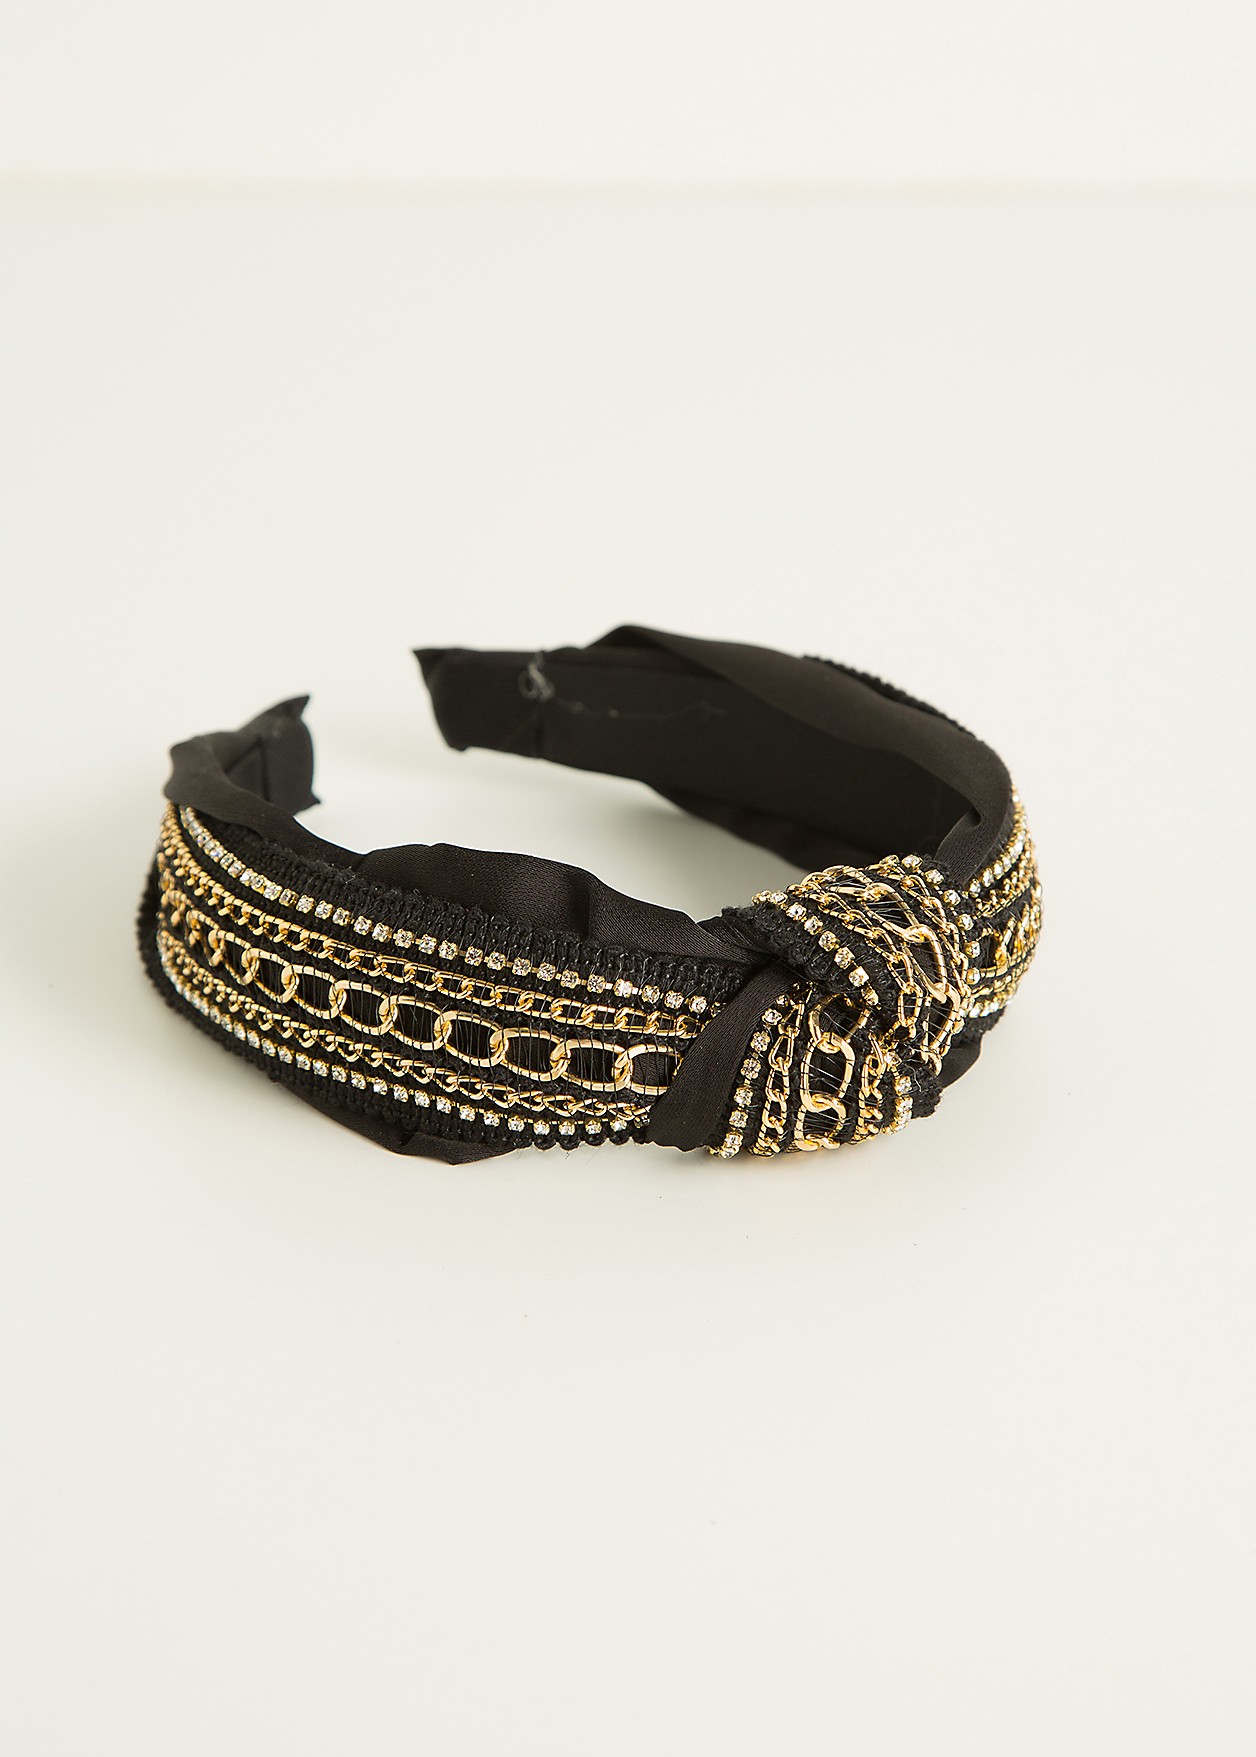 Headband with golden decorative details